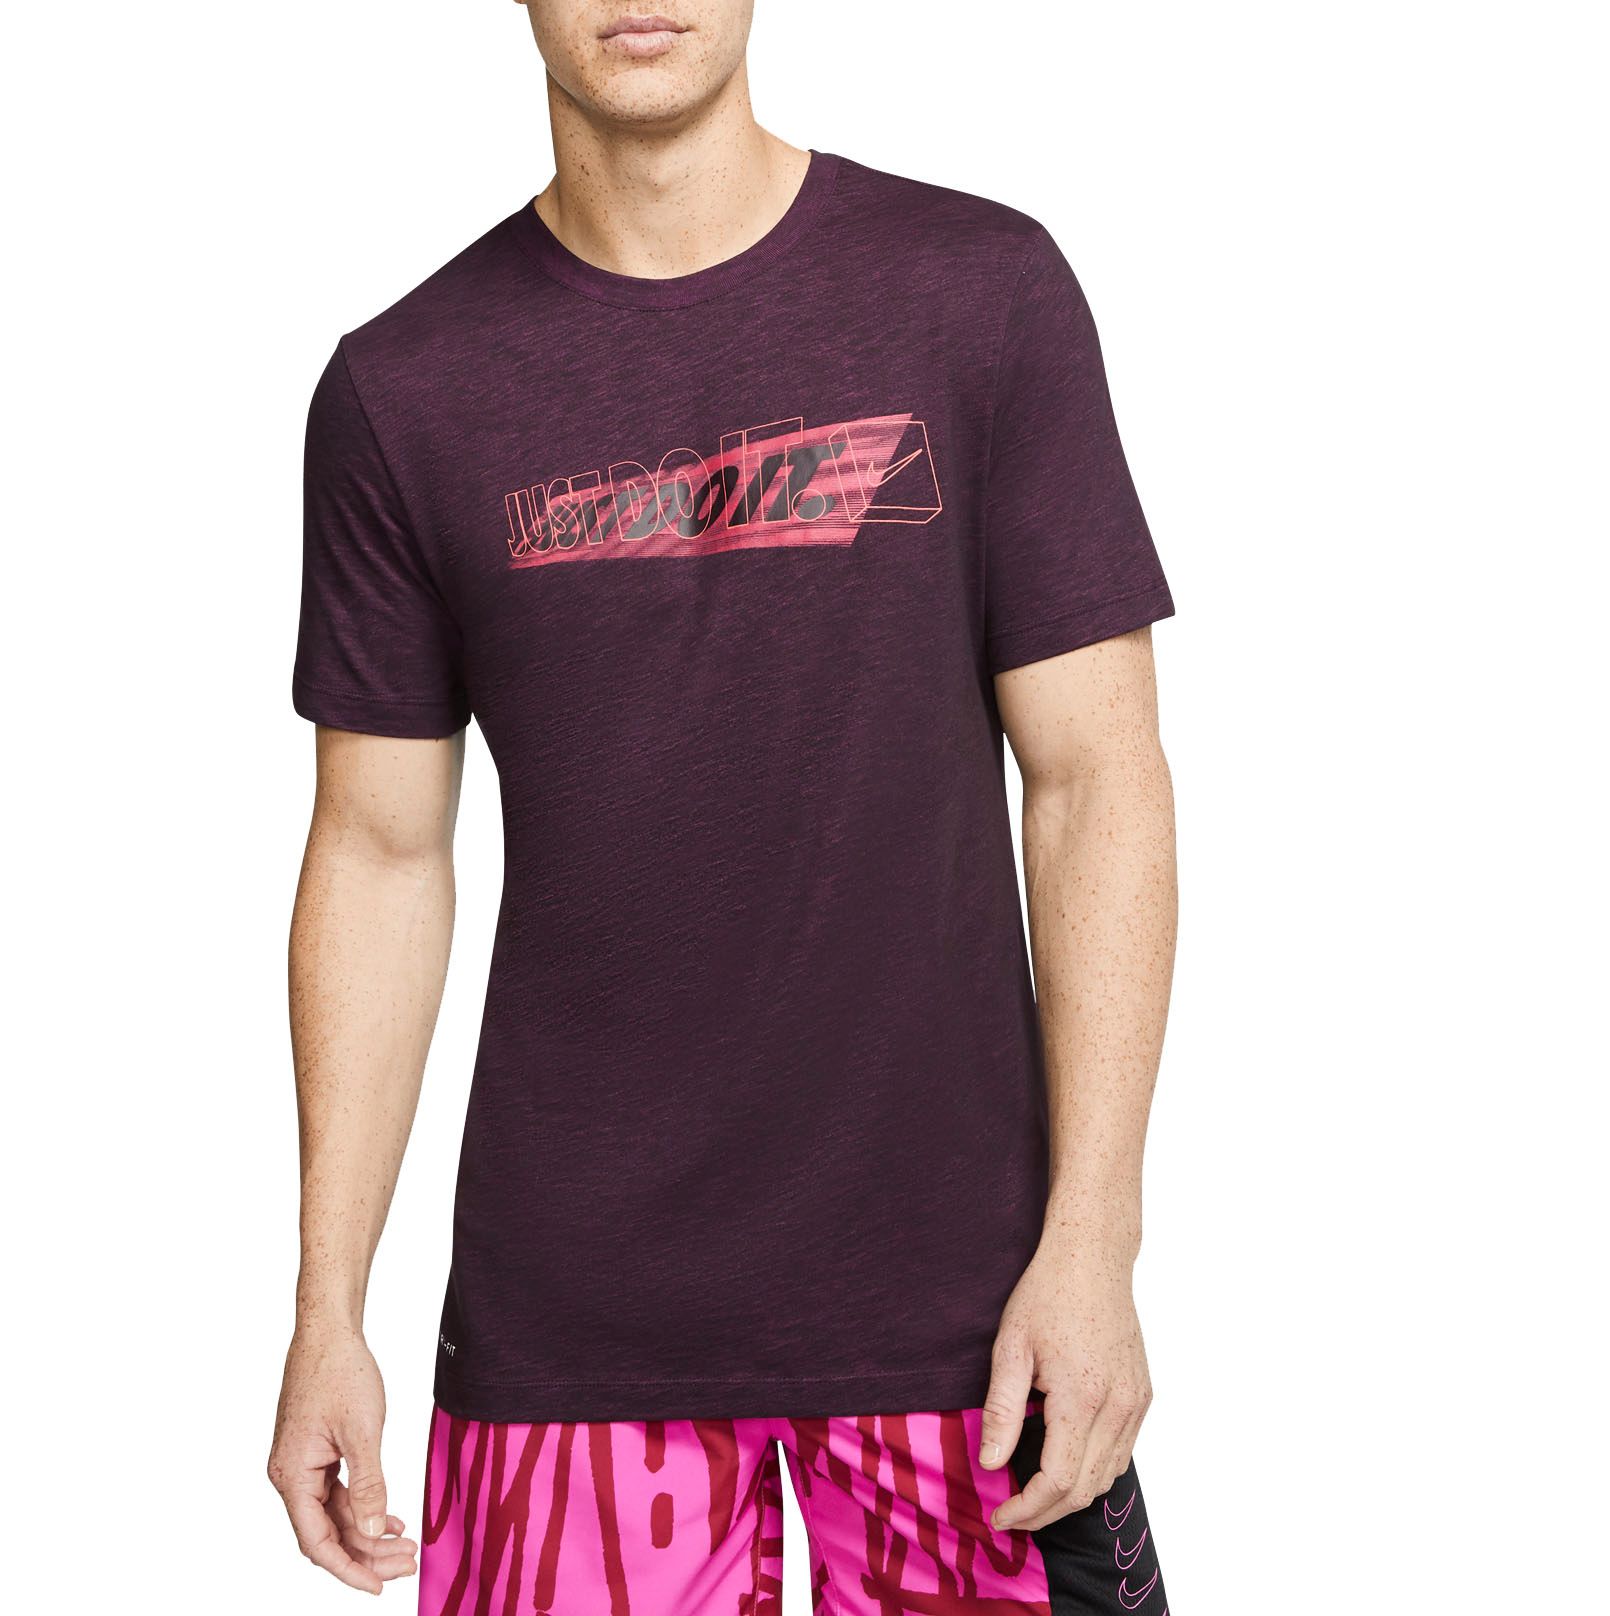 Nike Men's JDI Shadow Training T-Shirt - .75